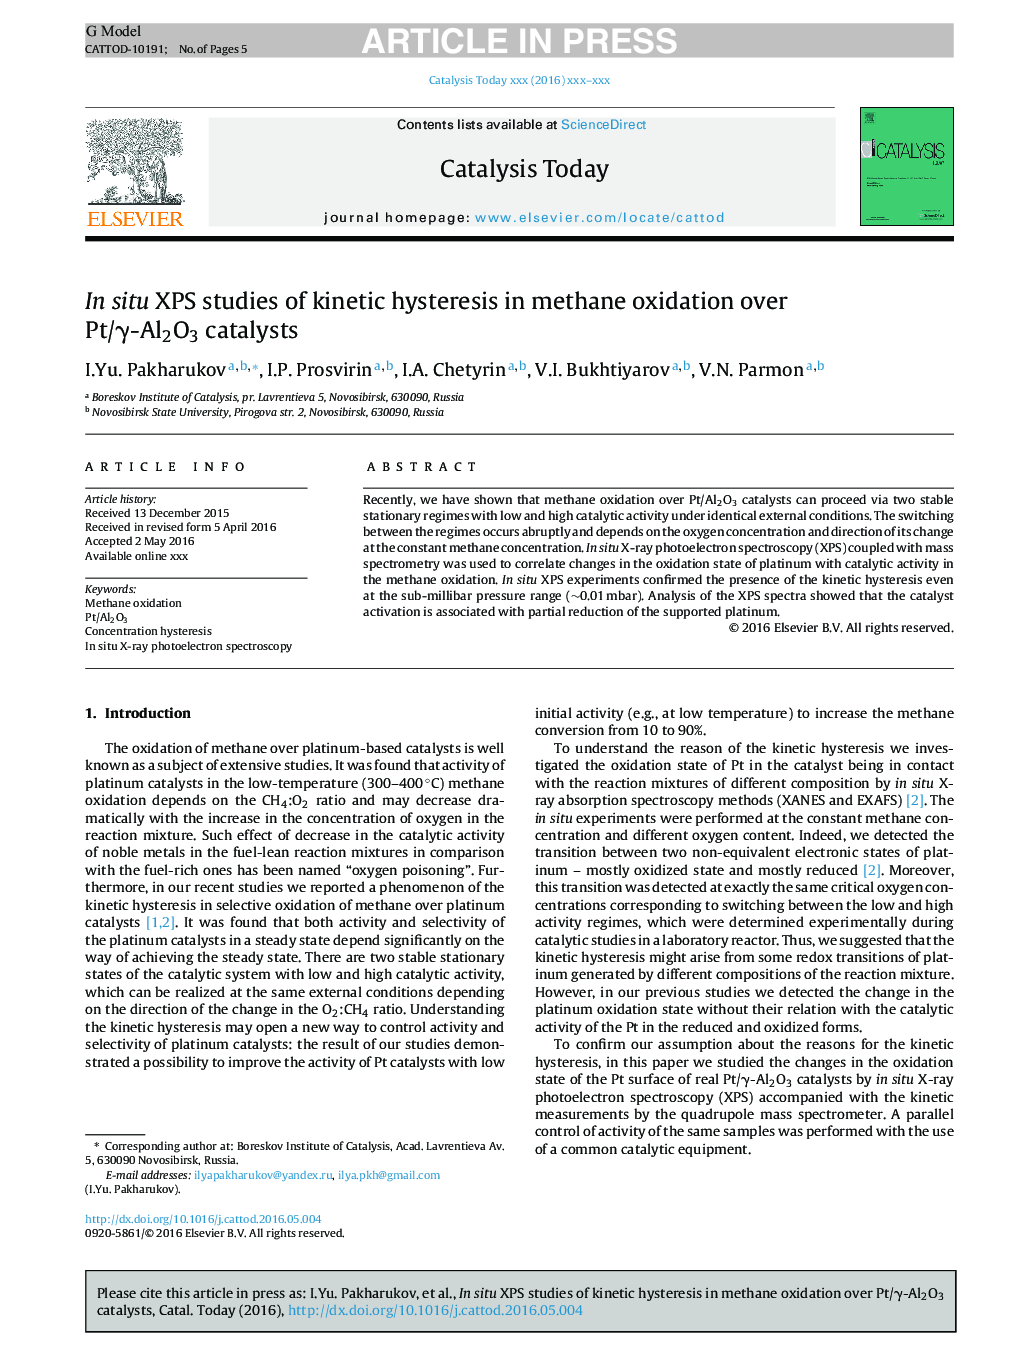 In situ XPS studies of kinetic hysteresis in methane oxidation over Pt/Î³-Al2O3 catalysts